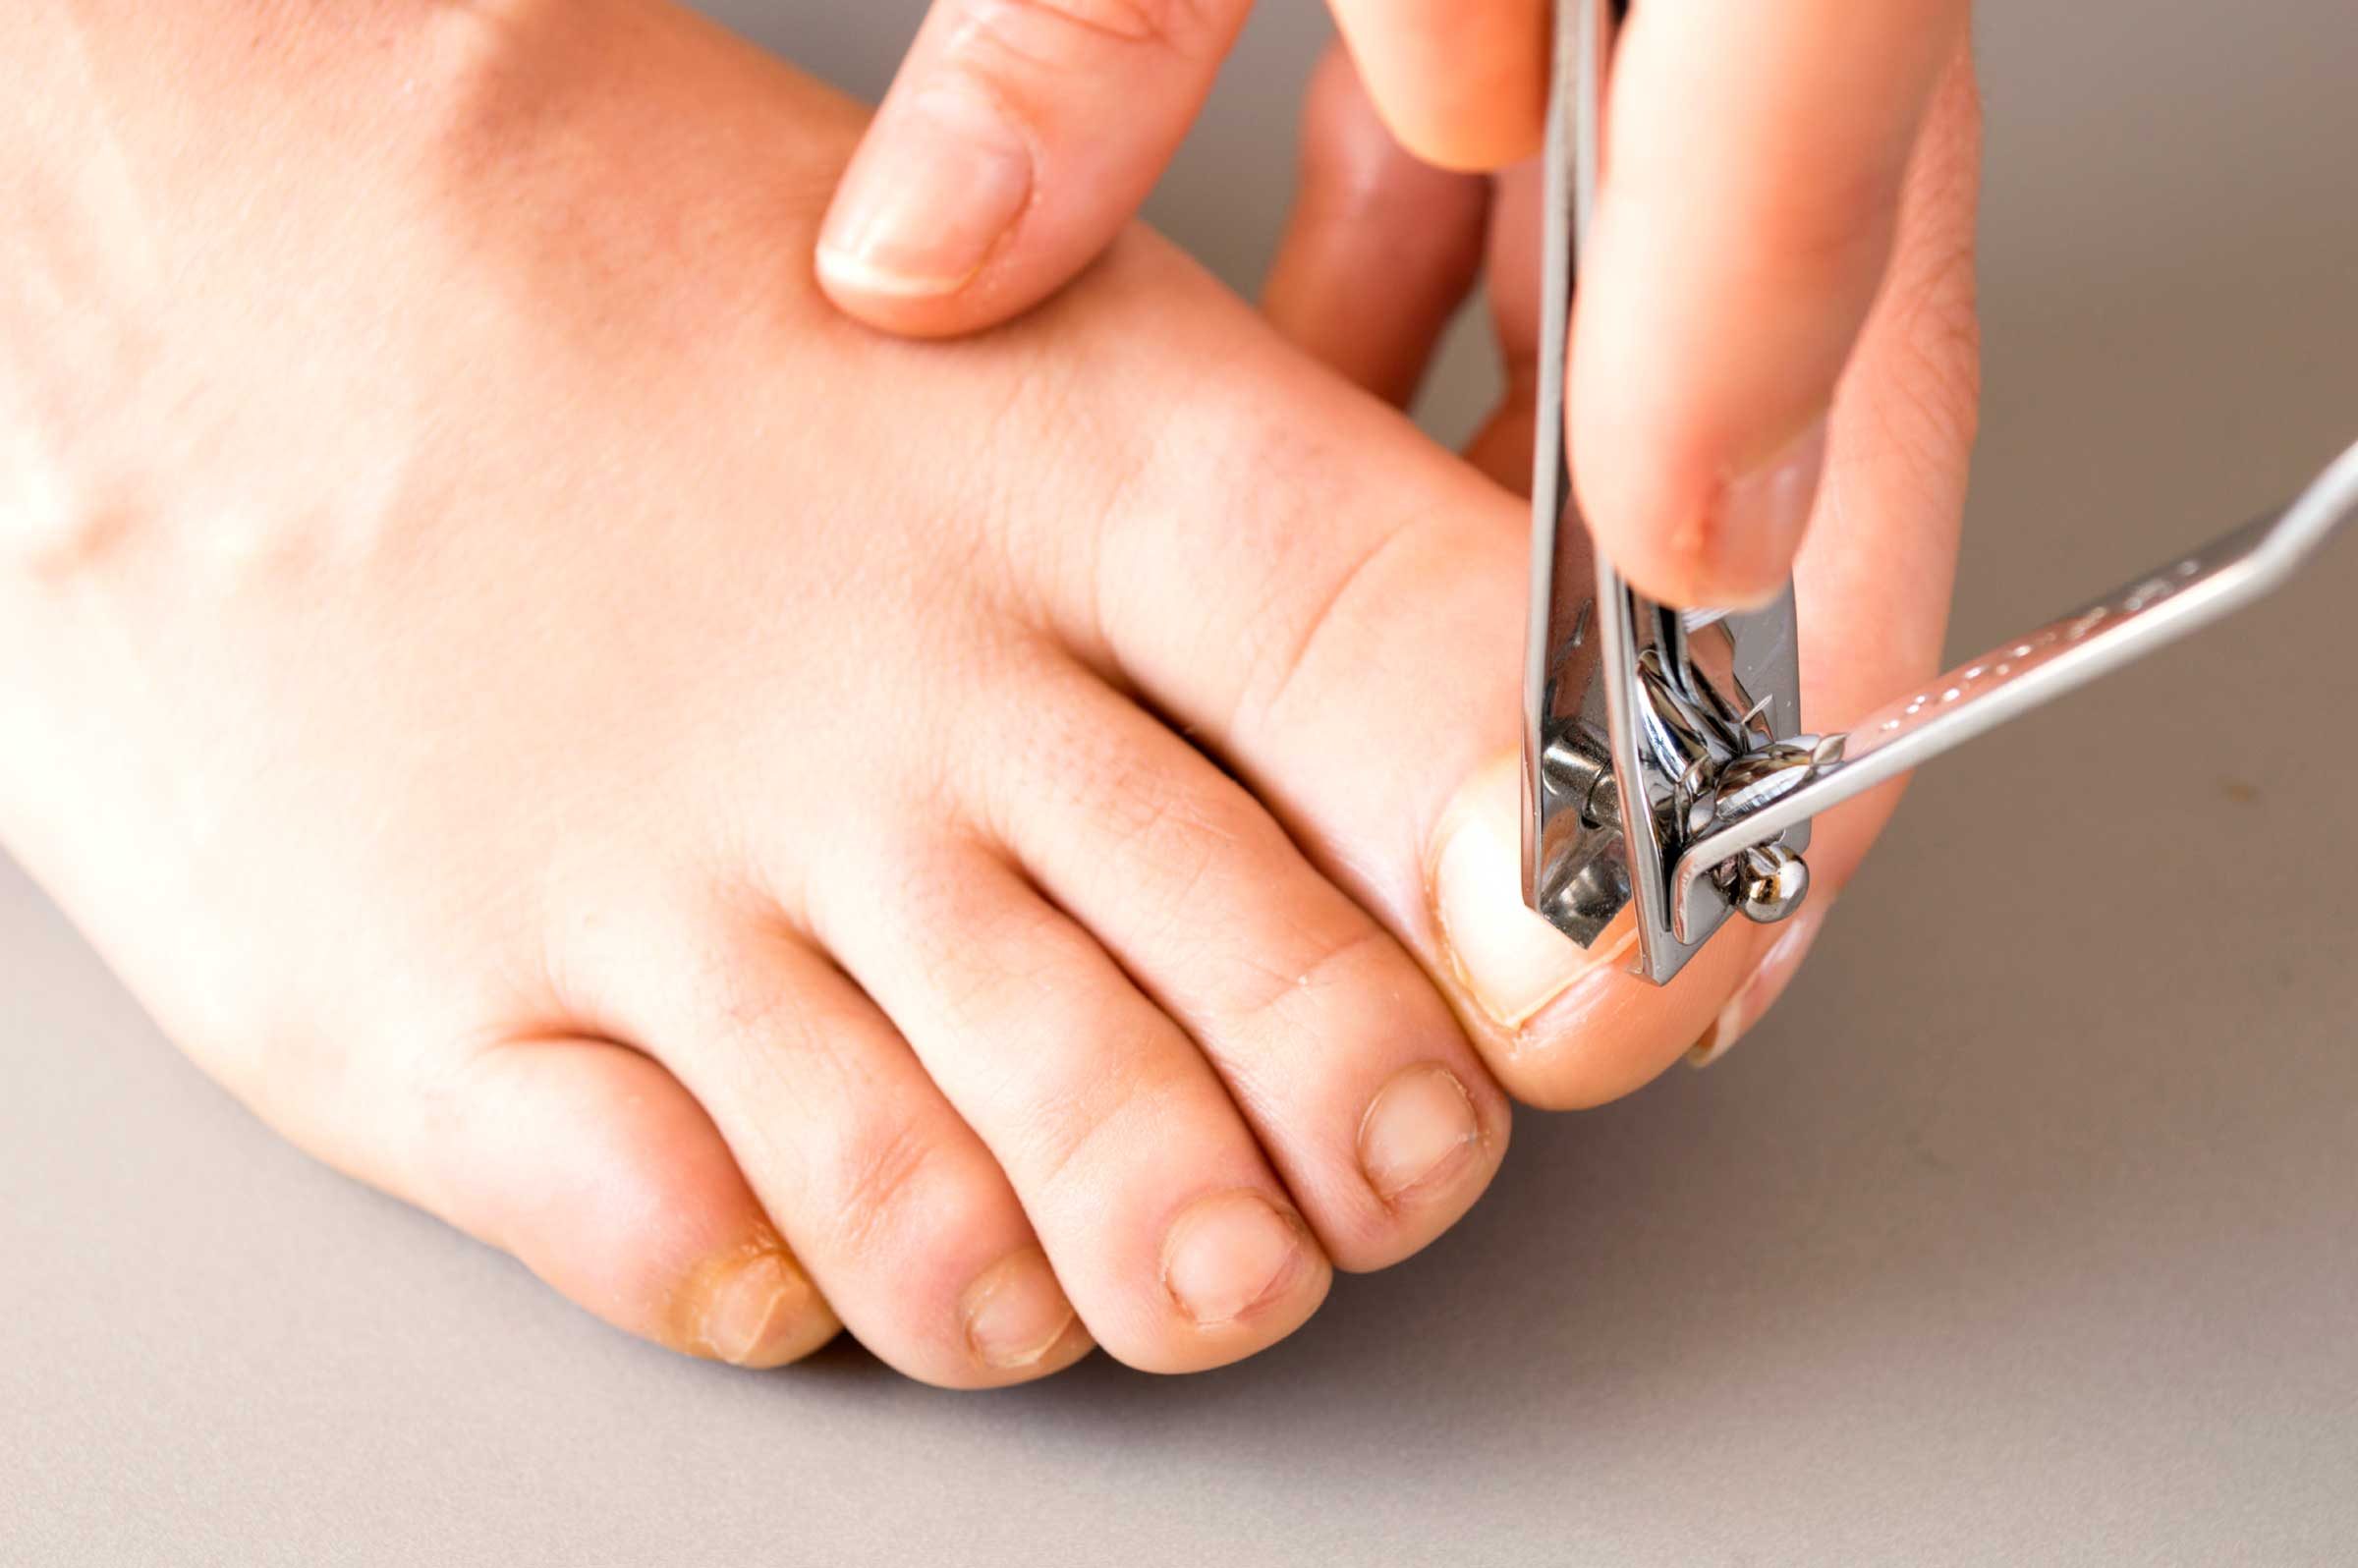 https://www.rd.com/wp-content/uploads/2016/03/08-healthy-feet-tips-diabetes-toenail-clippers.jpg